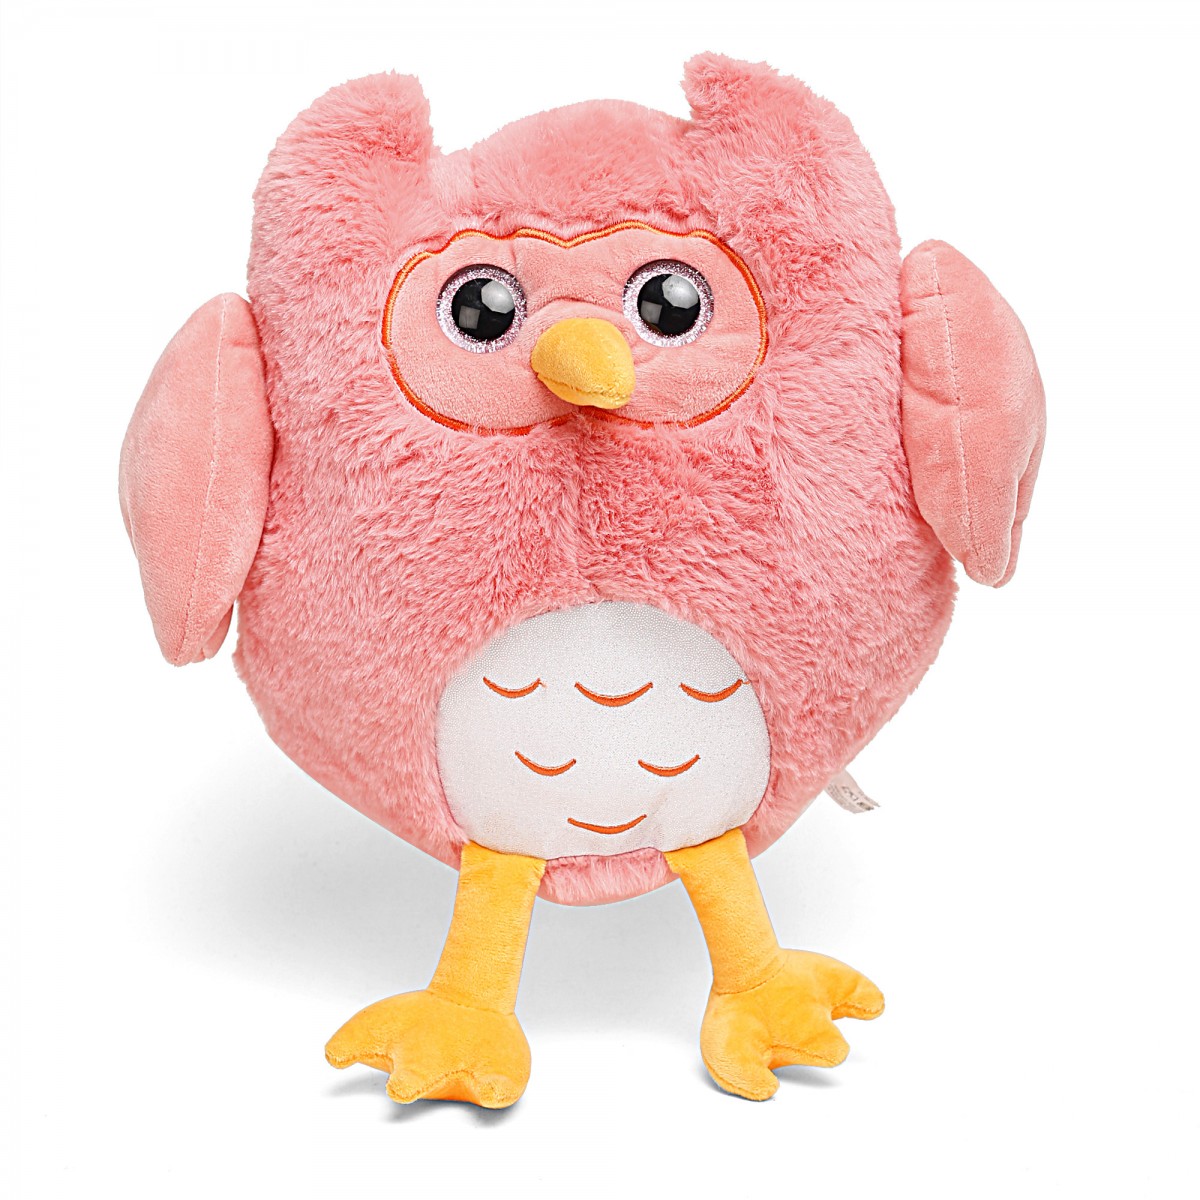 Fuzzbuzz Owl, Soft Toys for Kids, Coral, 29cm